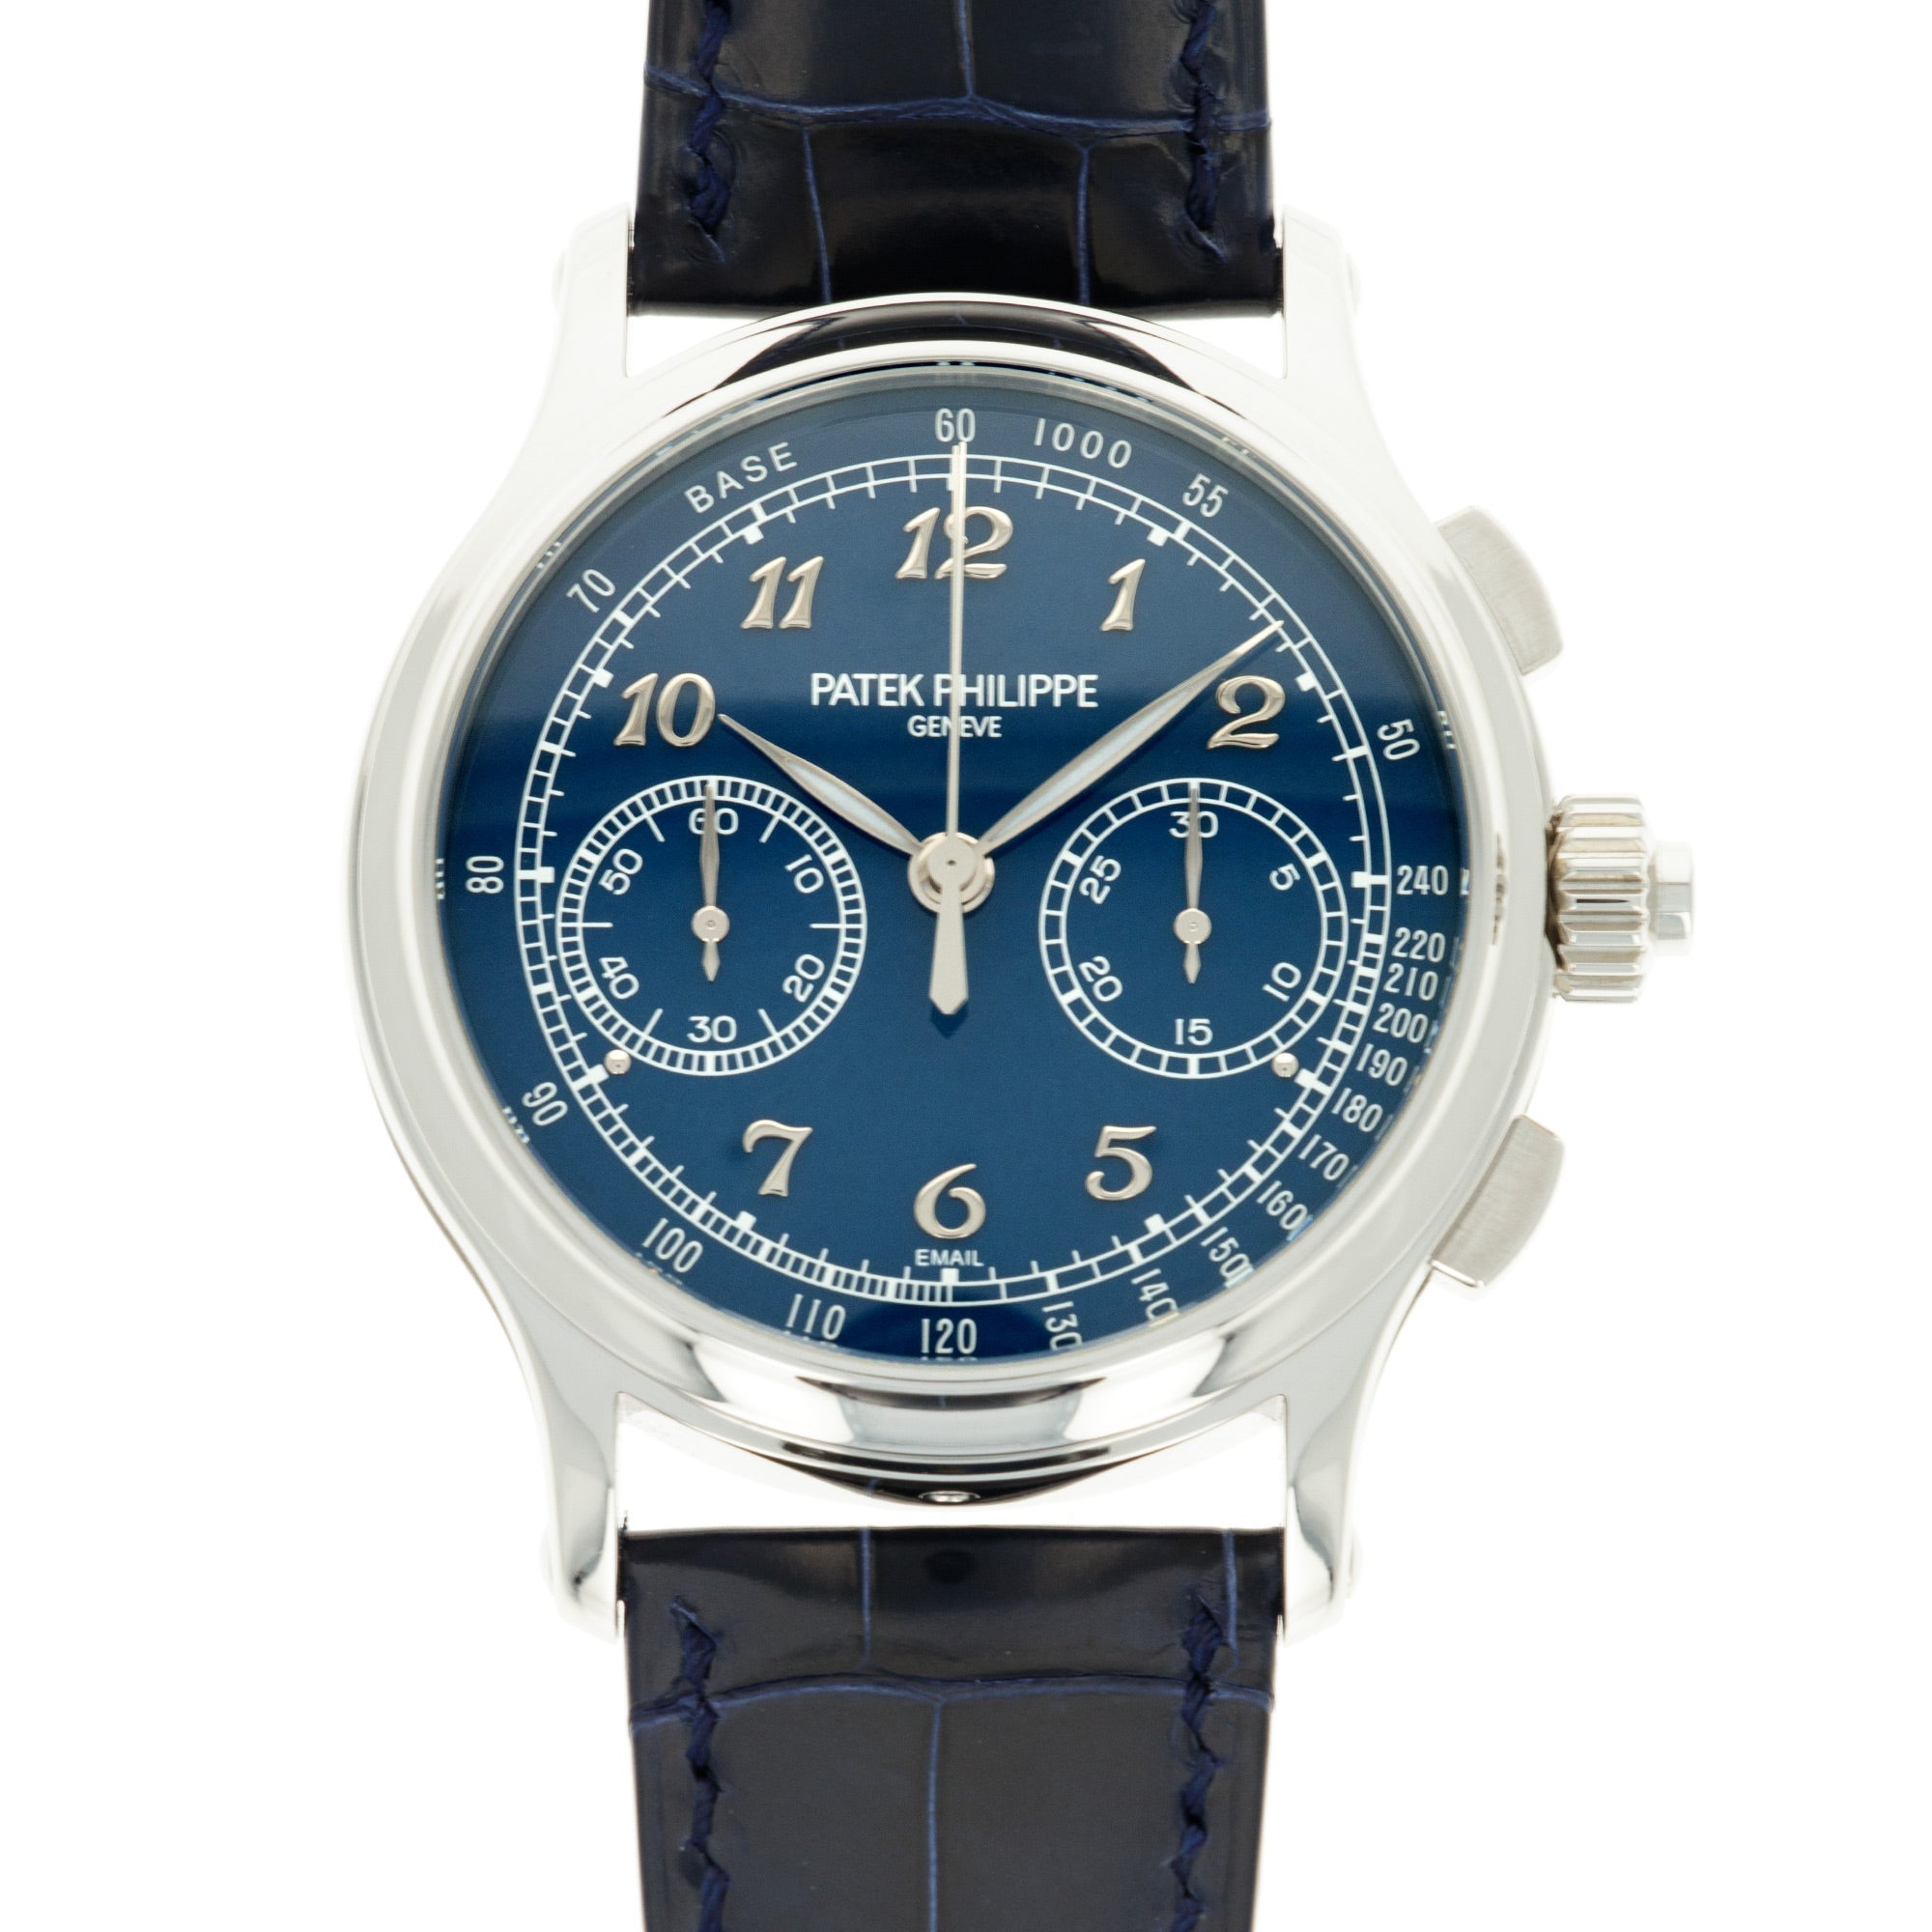 Patek Philippe - Patek Philippe Platinum Split Seconds Chronograph Watch Ref. 5370 - The Keystone Watches